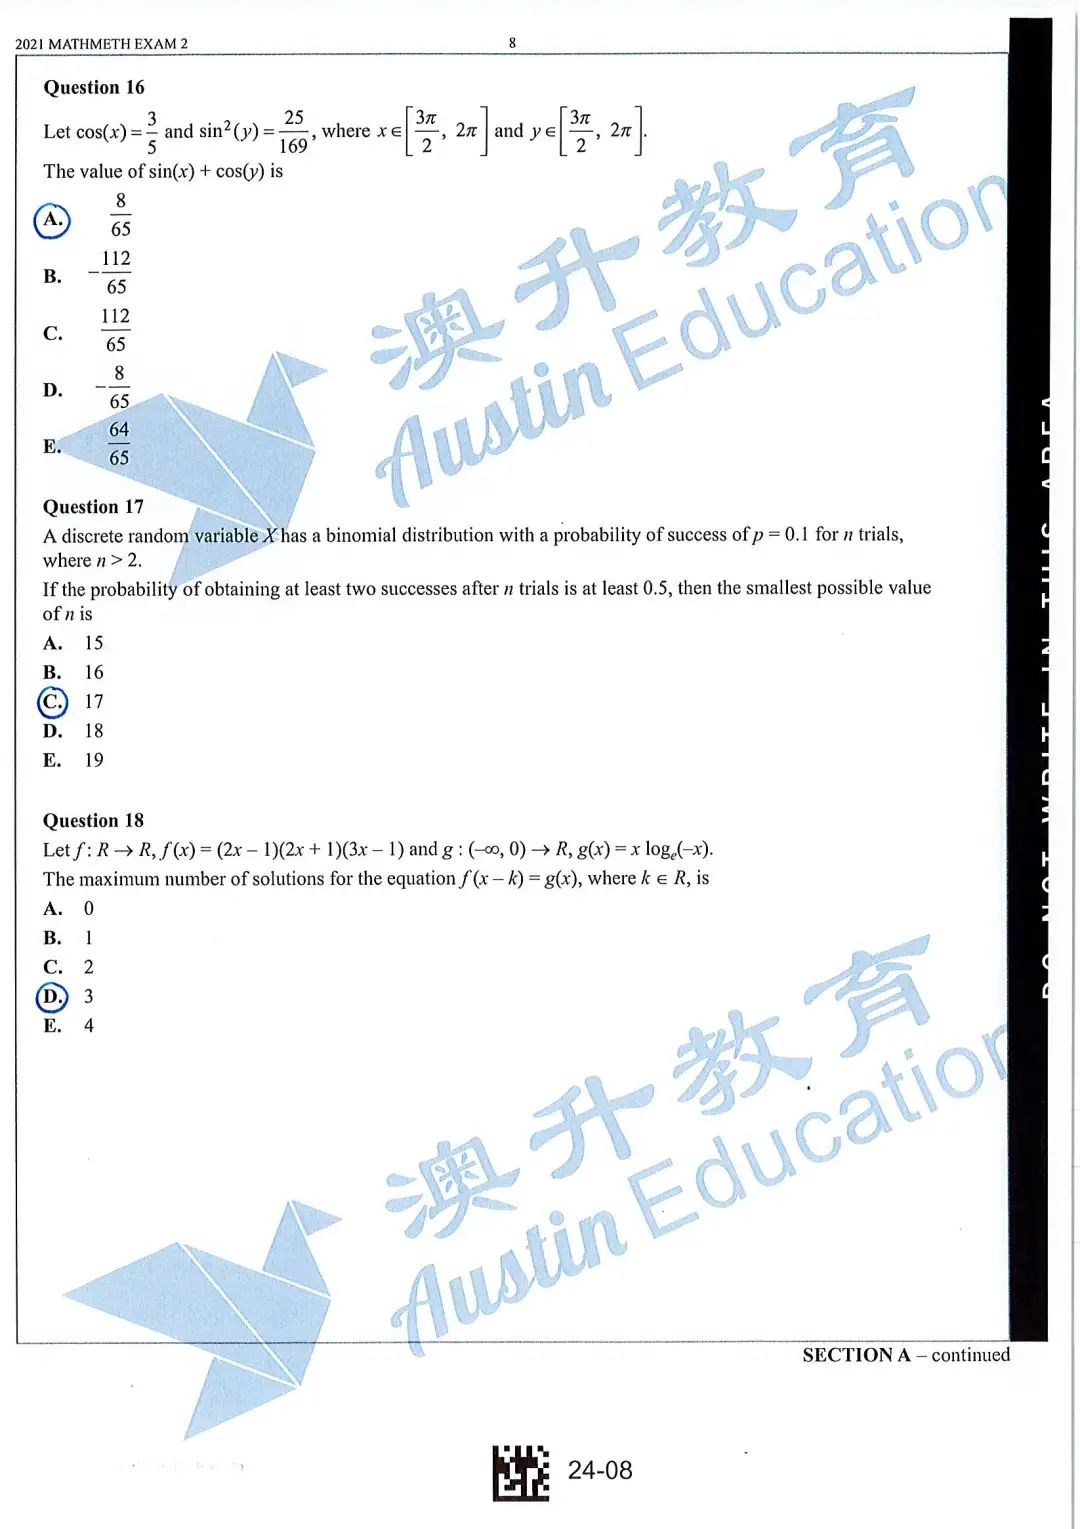 vce exam timetable 2021 - Austin Education 07